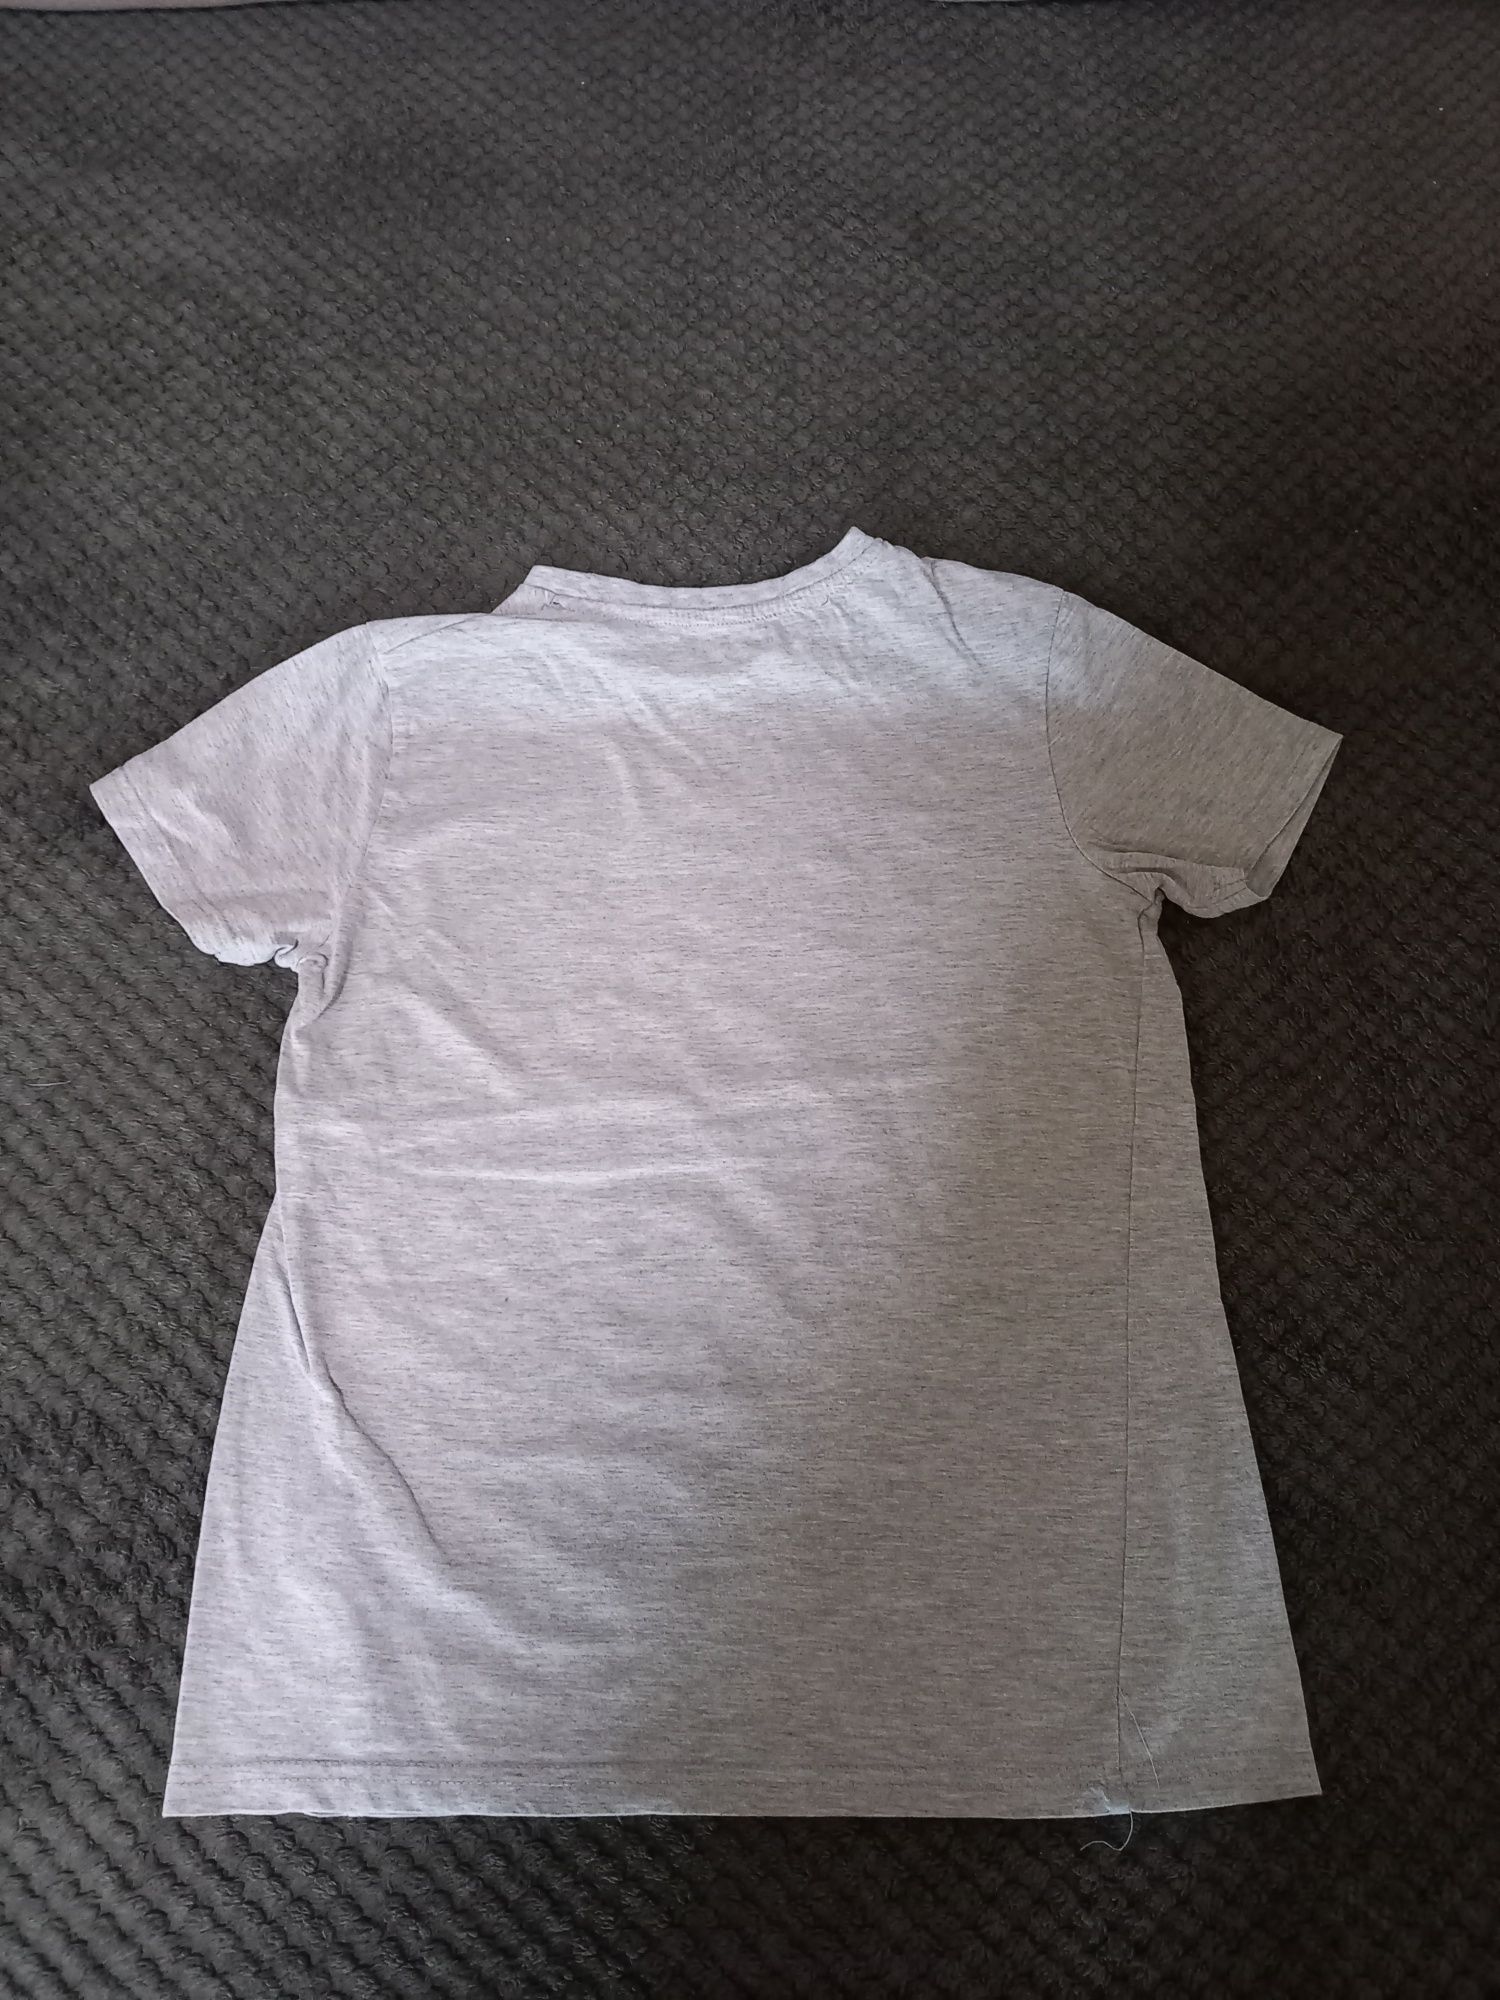 Koszulki  T-shirt rozmiar 158/164 2 sztuki